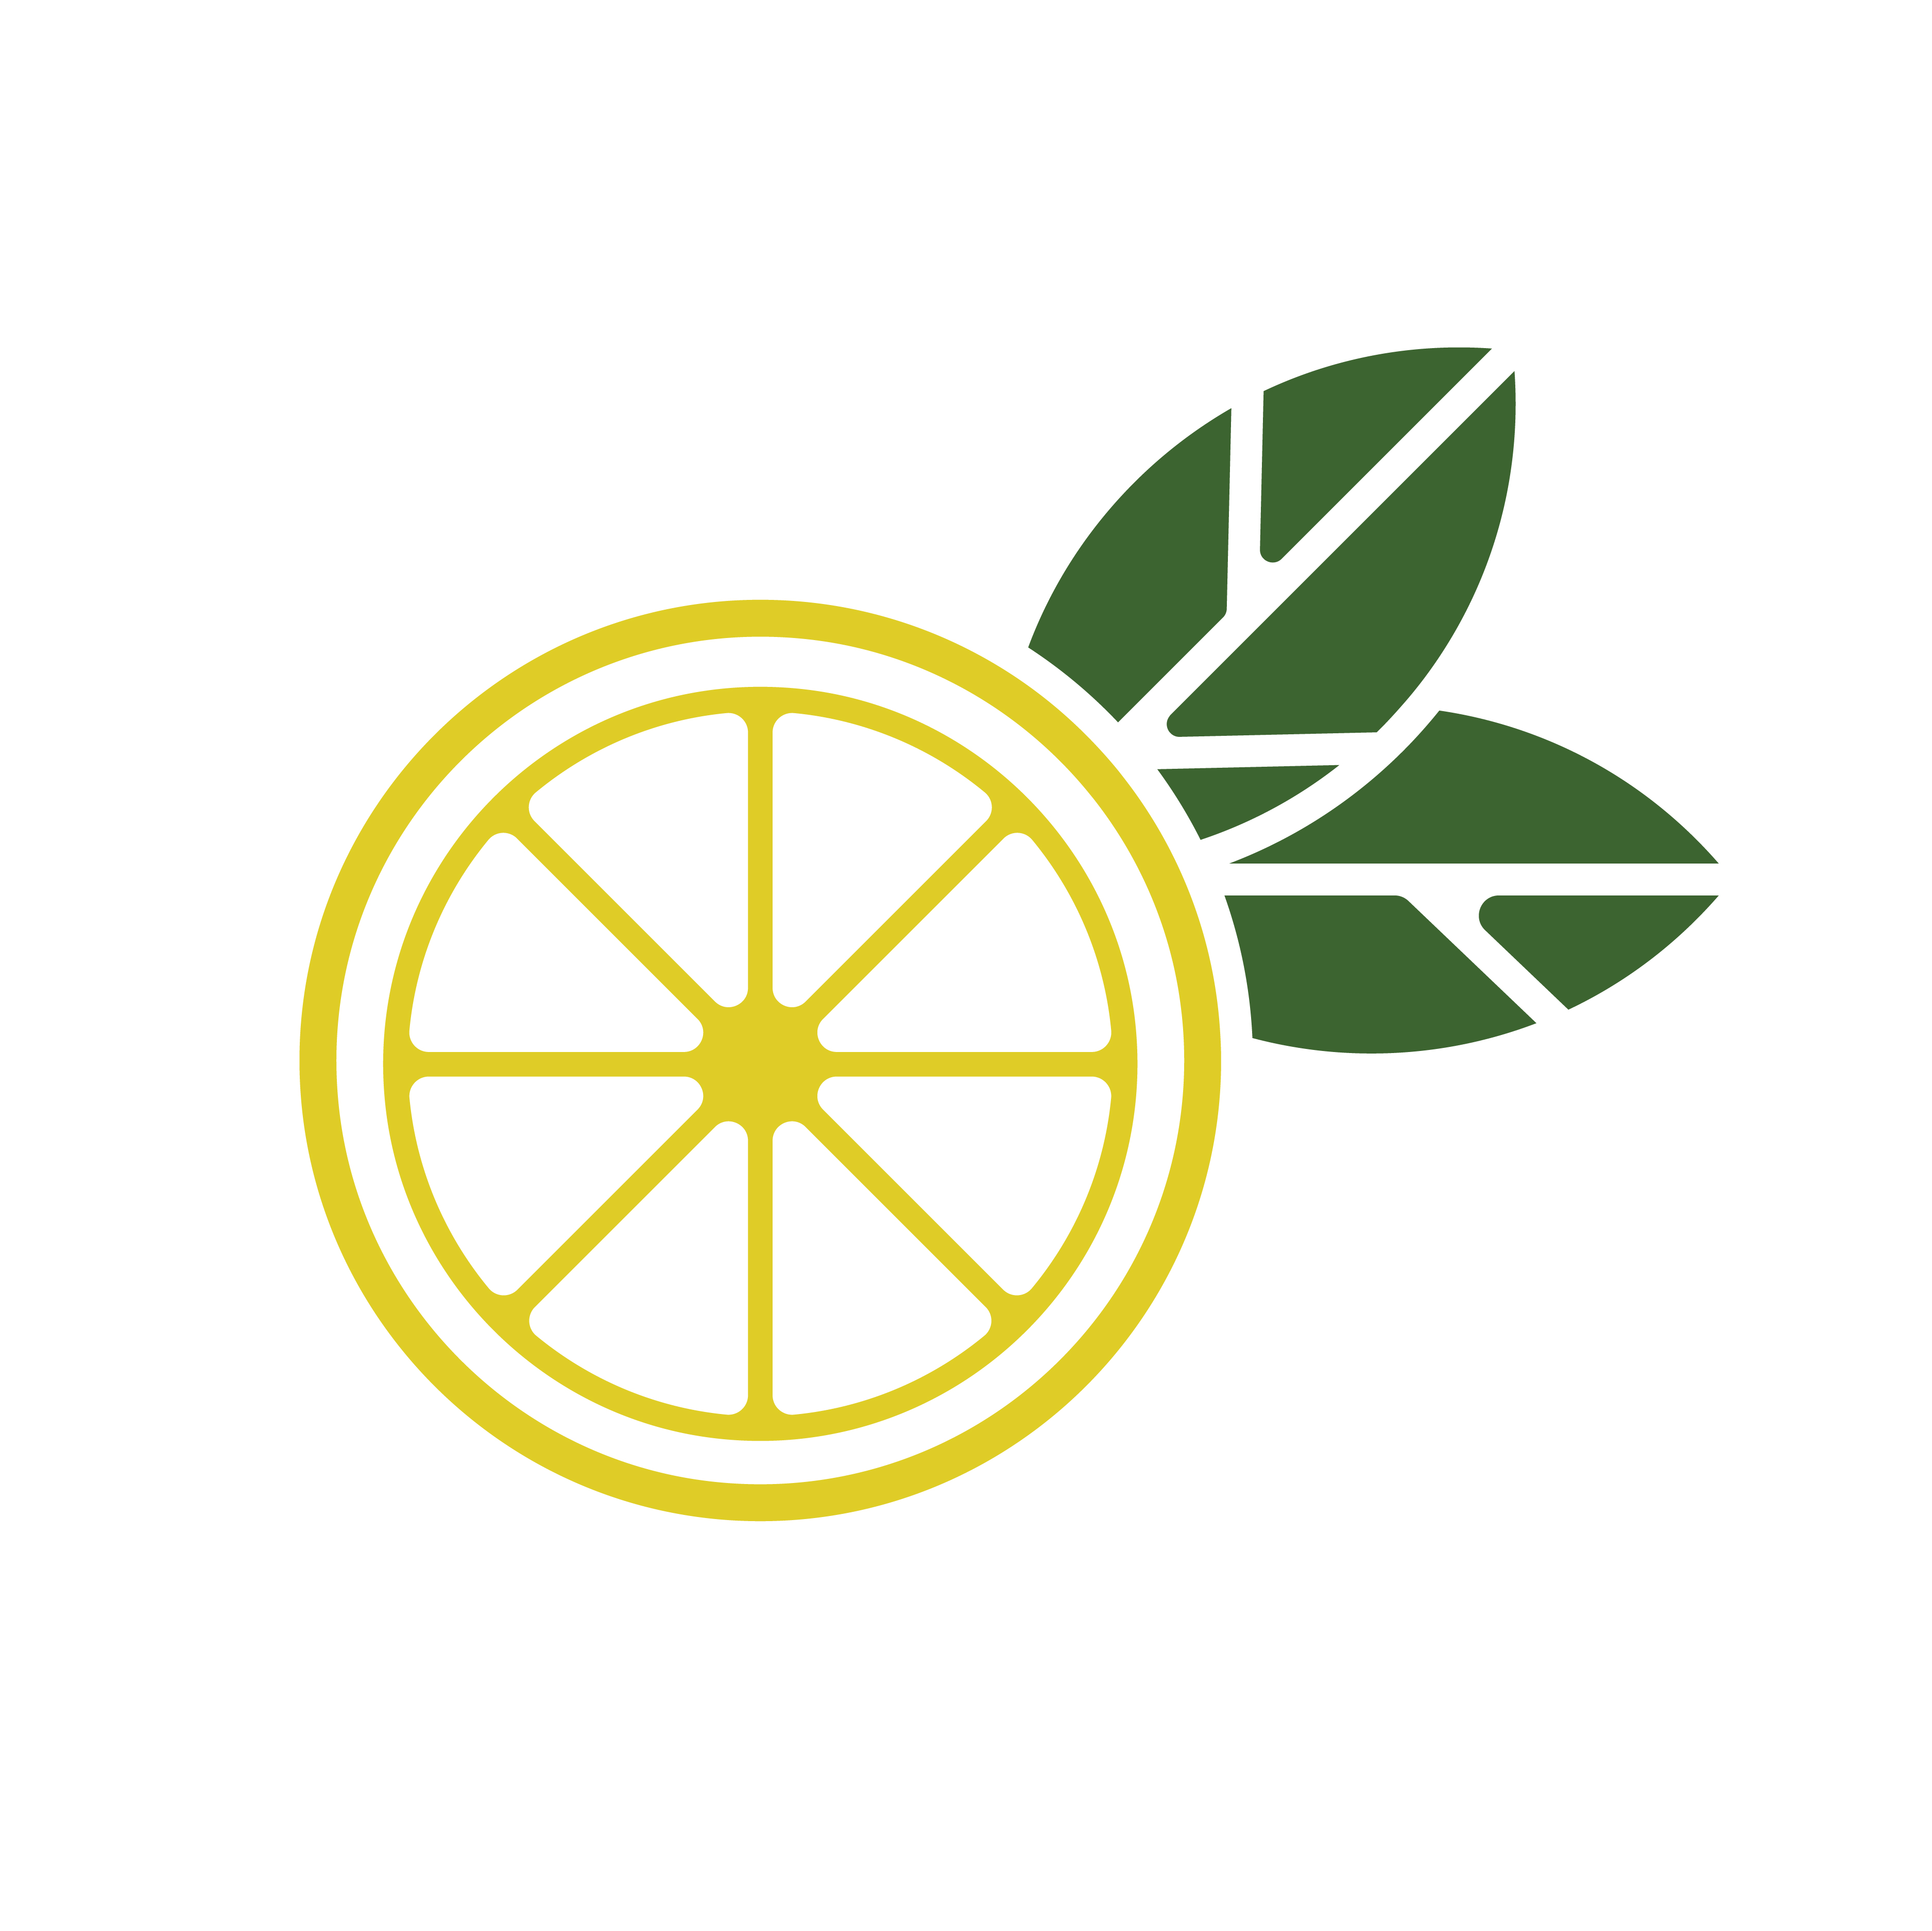 Lemon Mark  logo design by logo designer Stellen Design for your inspiration and for the worlds largest logo competition